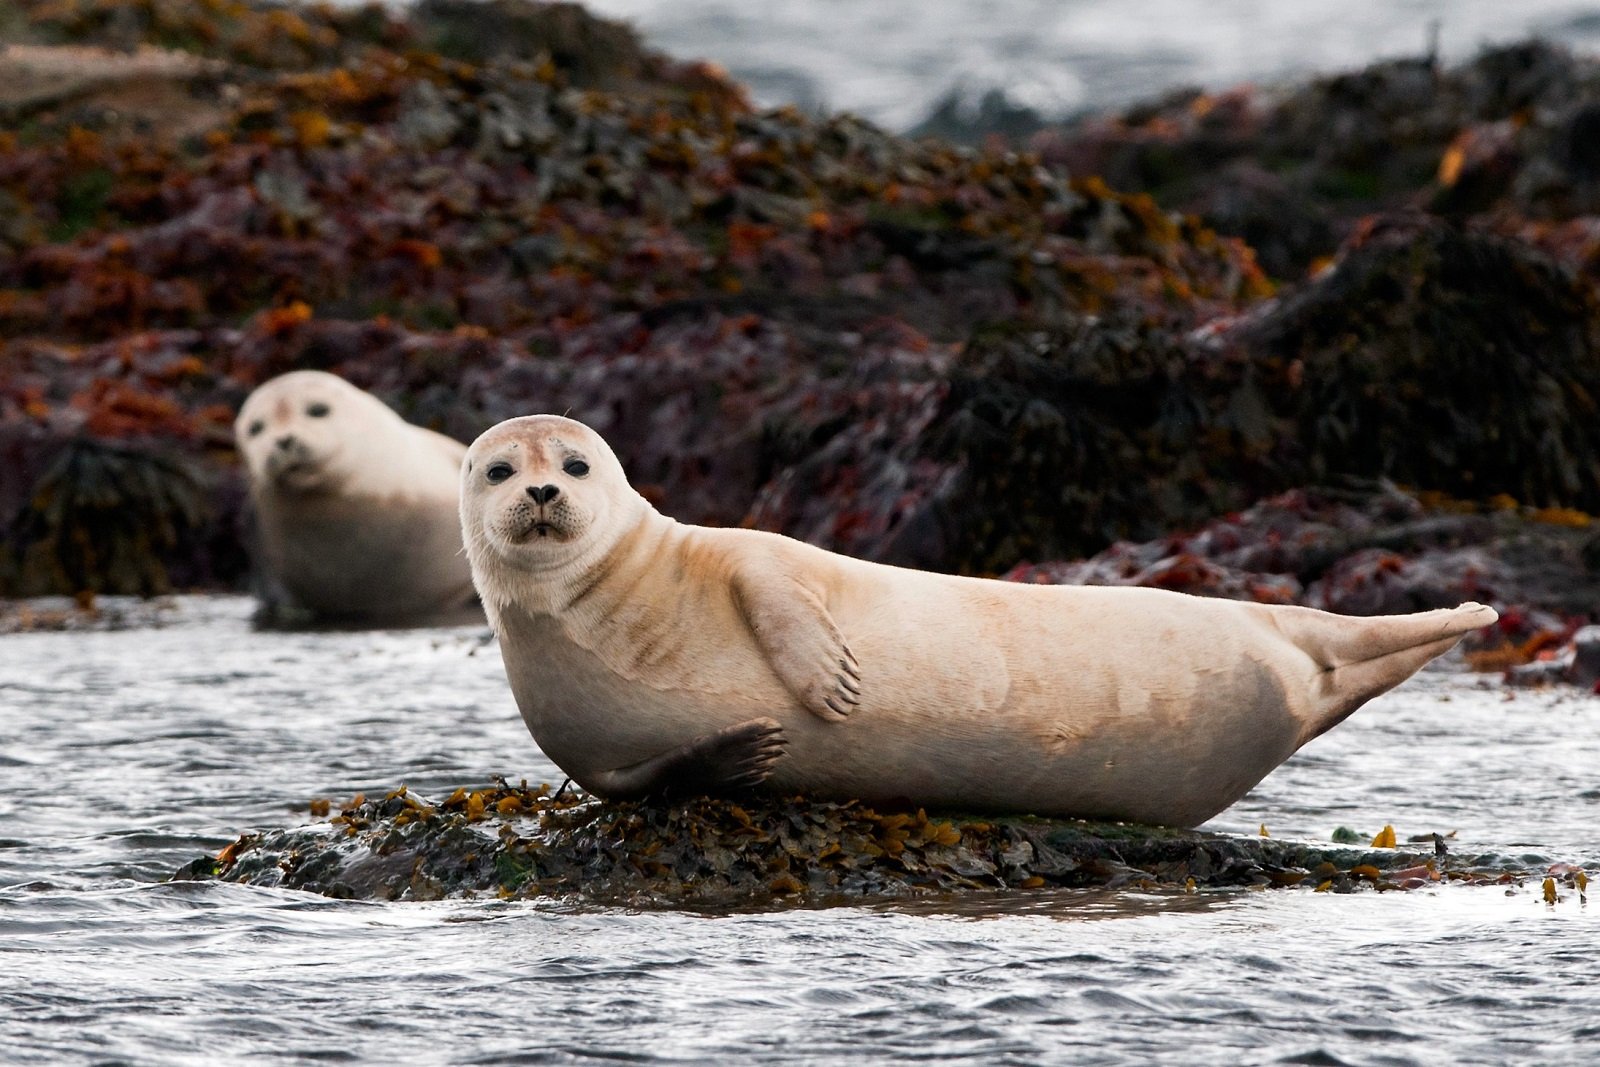 How to watch seals in Reykjavik